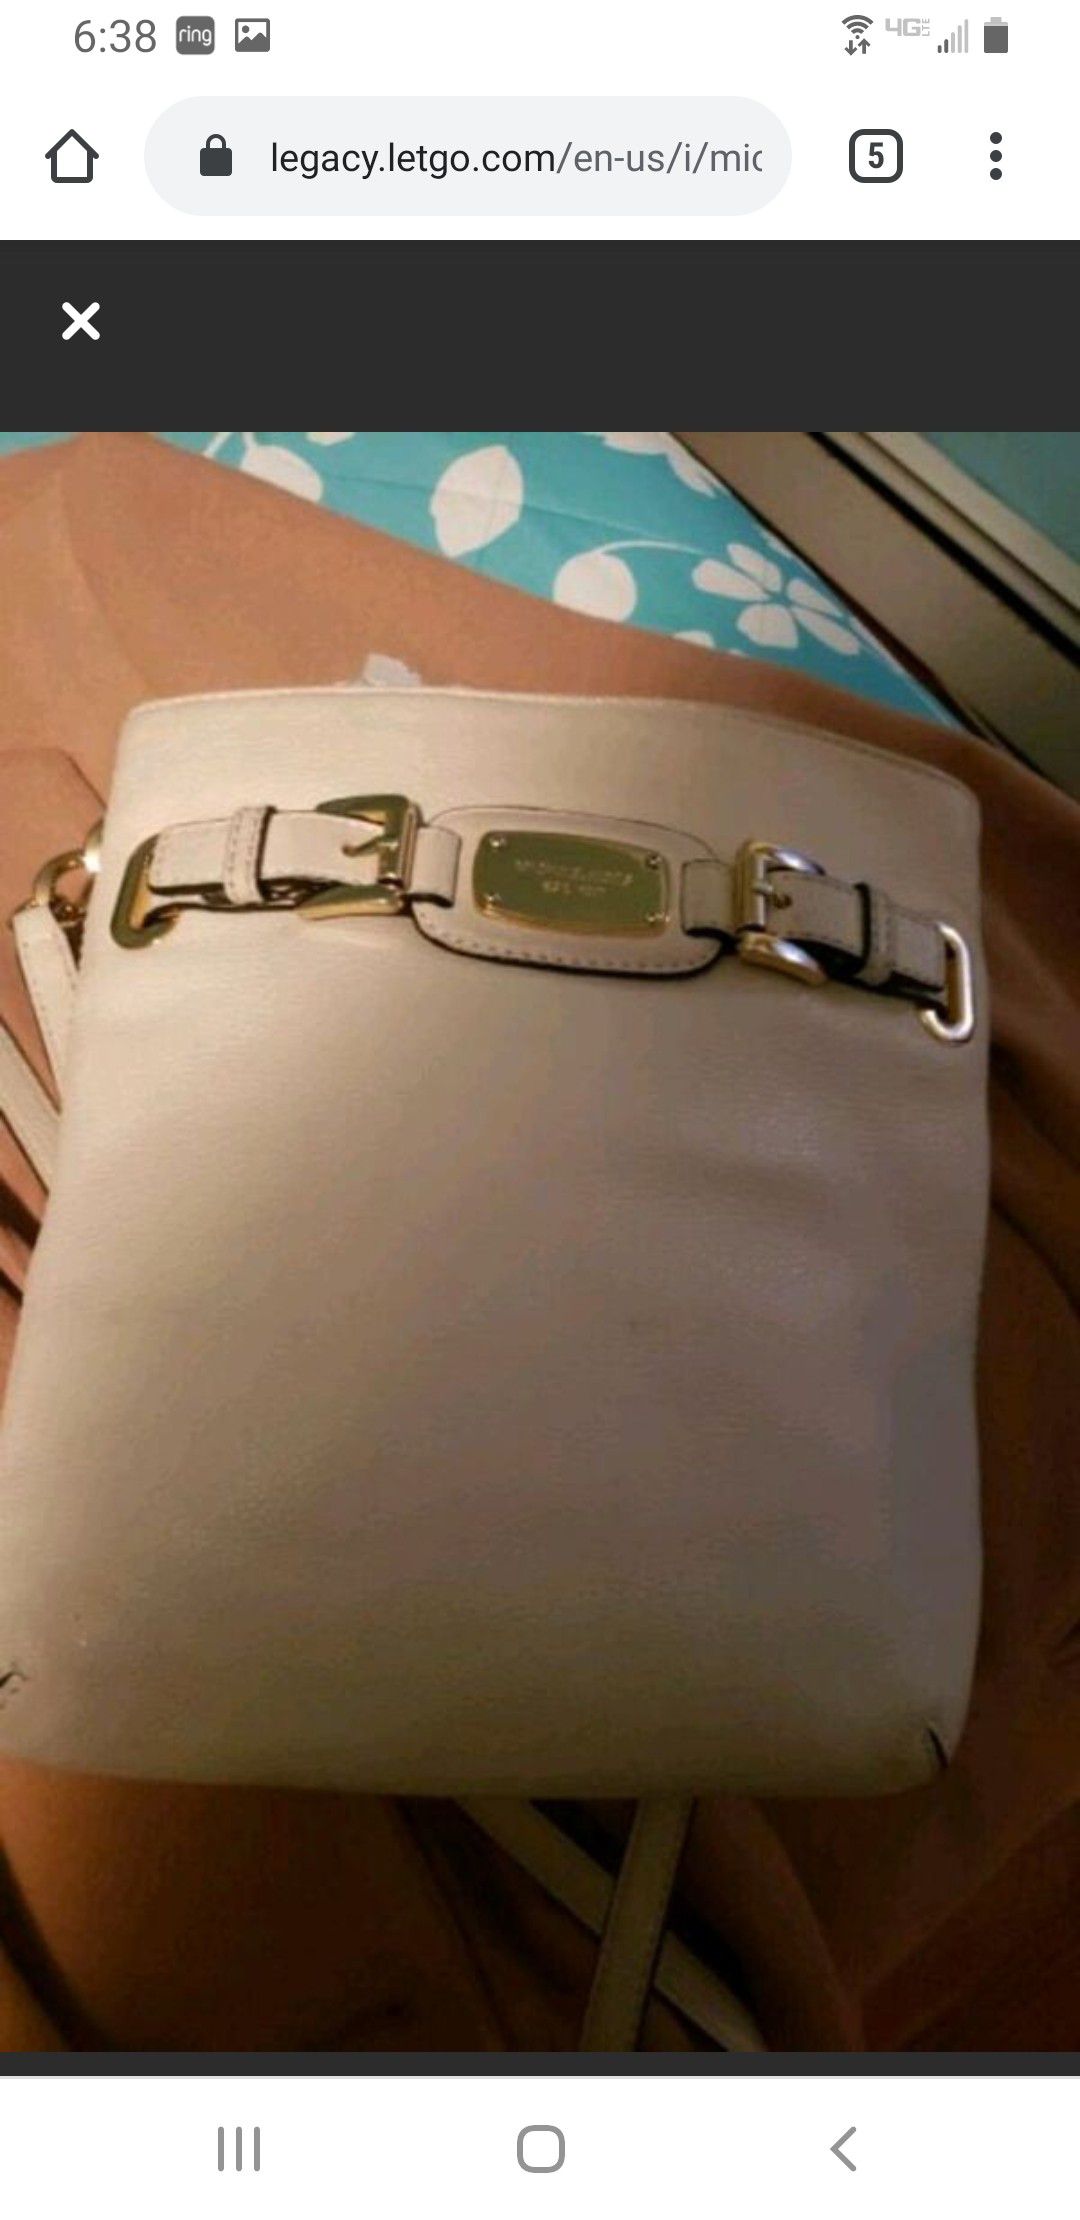 Michael Kors crossover bag